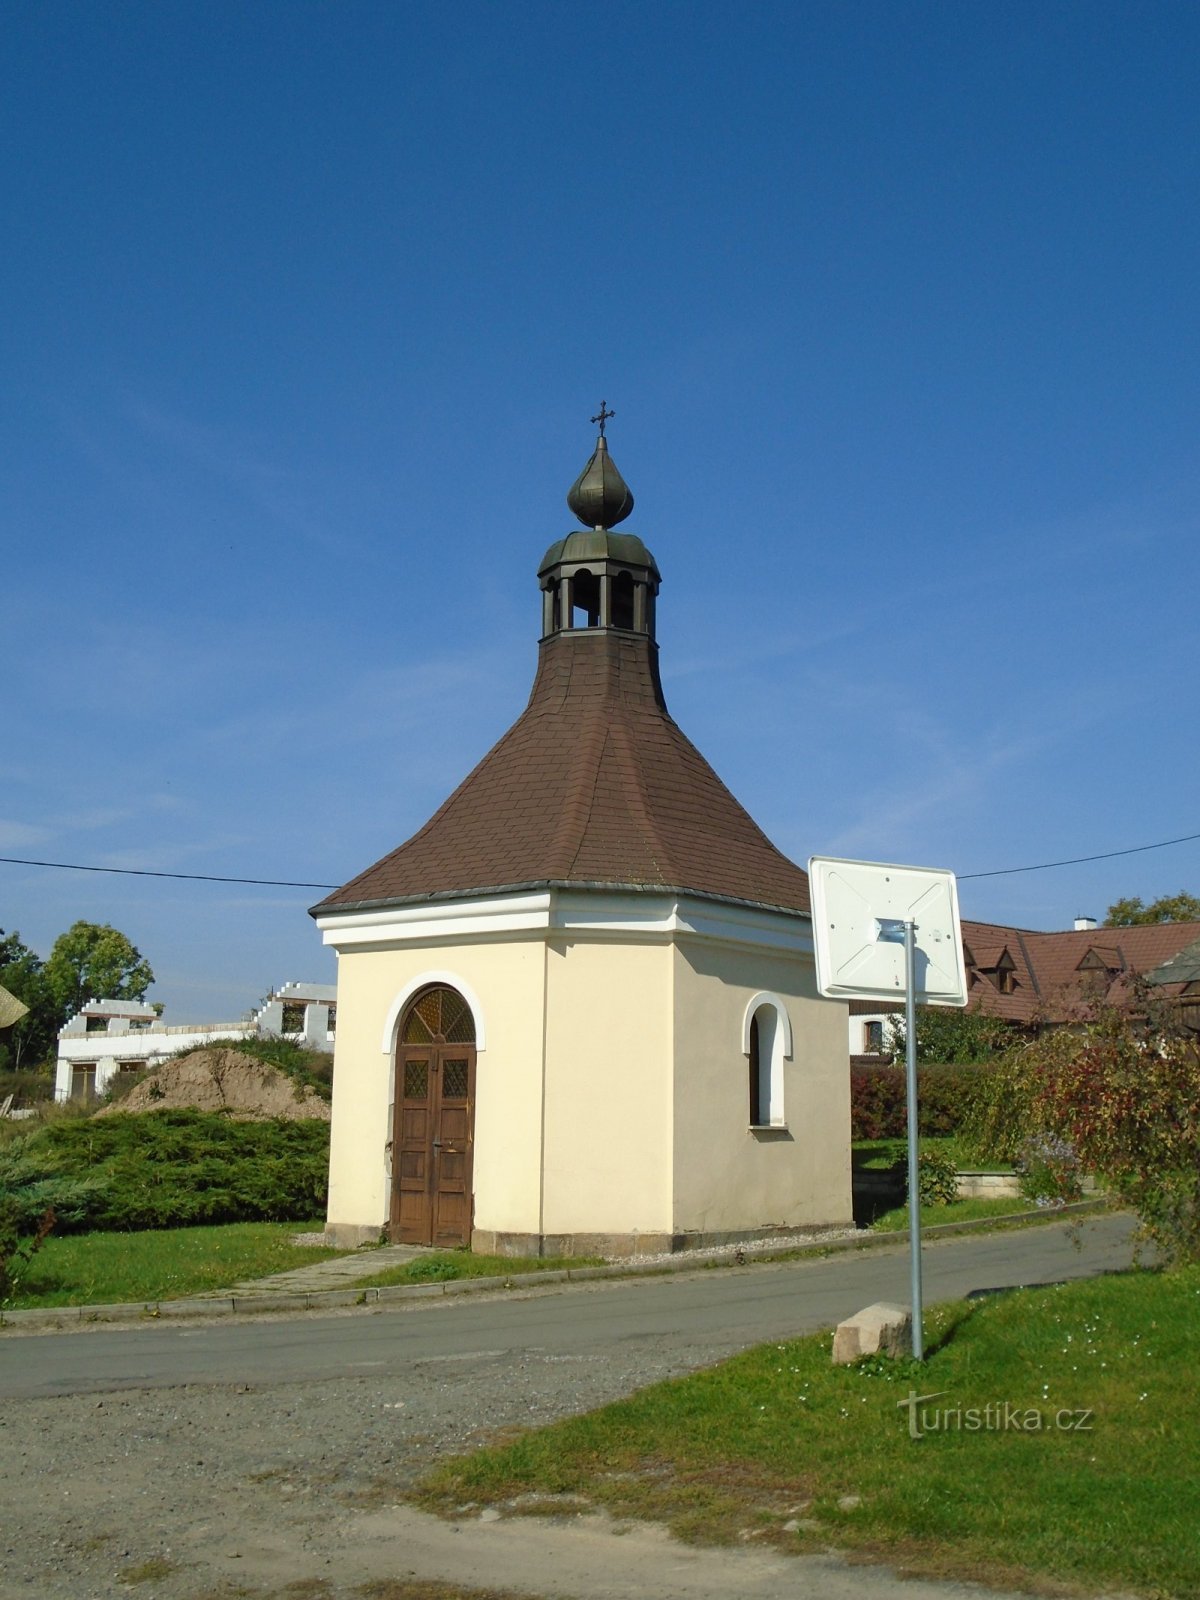 Chapel (Malá Bukovina, 1.10.2017/XNUMX/XNUMX)